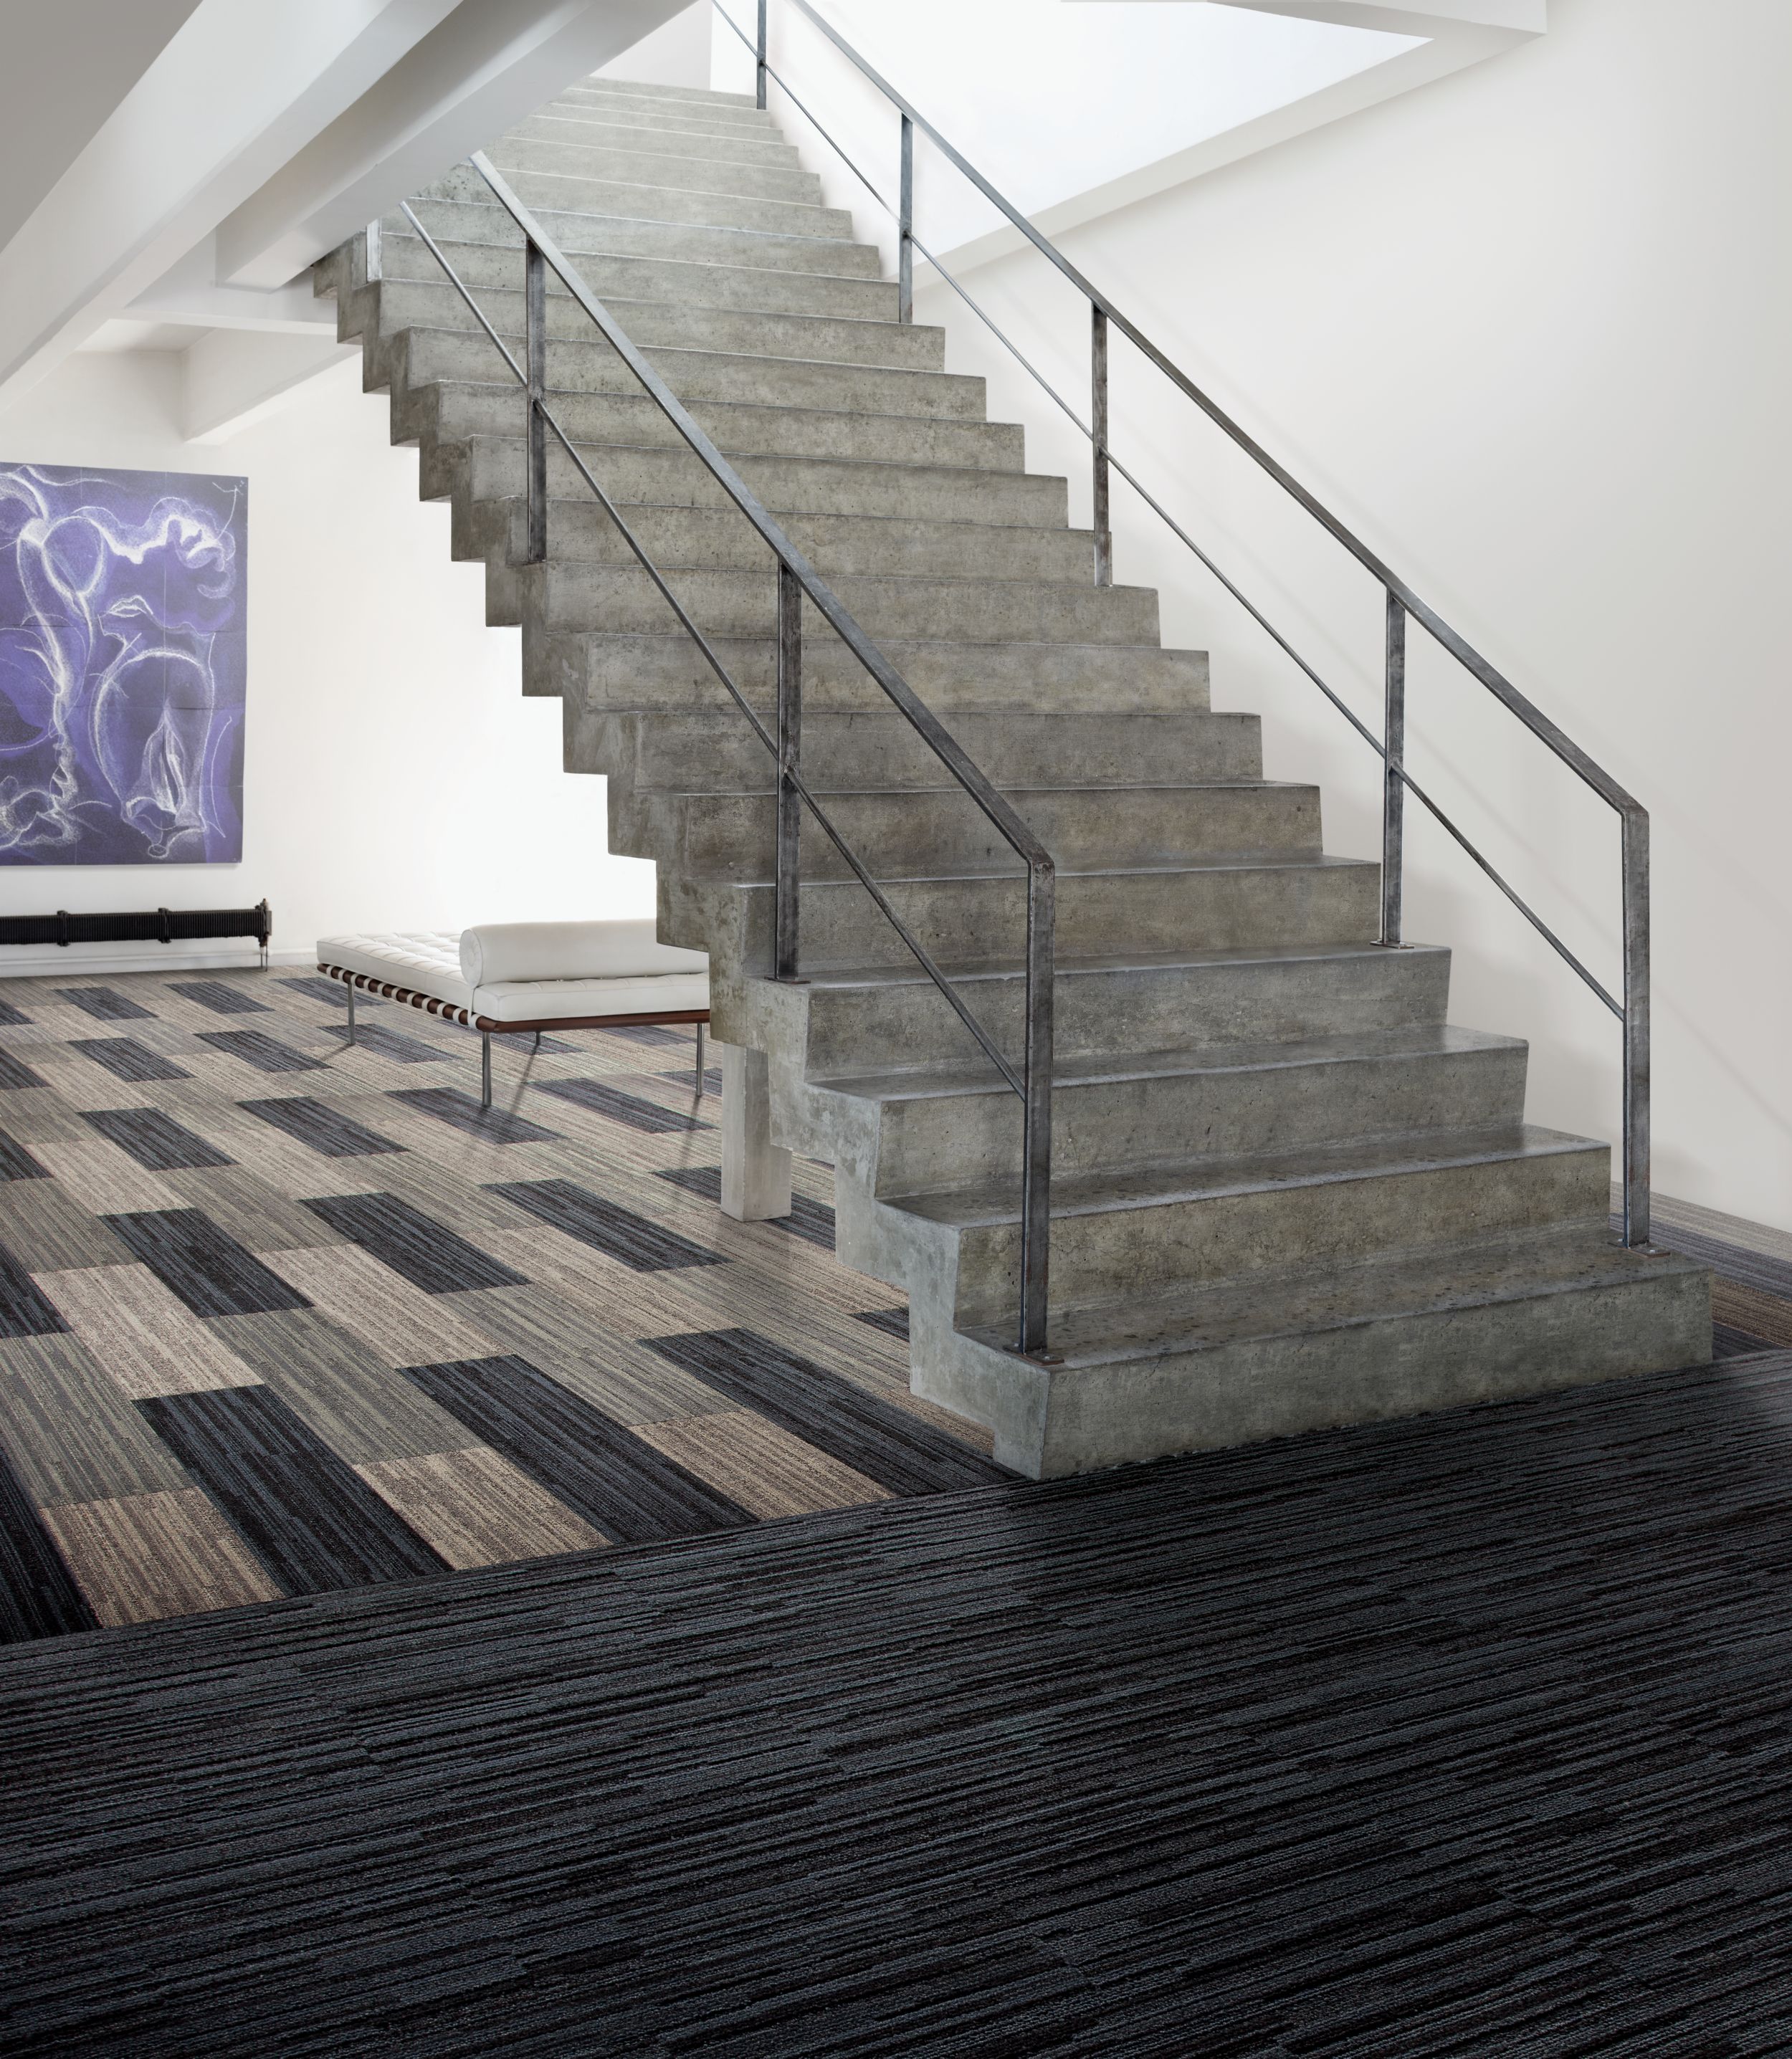 Interface B701 plank carpet tile in stairwell imagen número 1